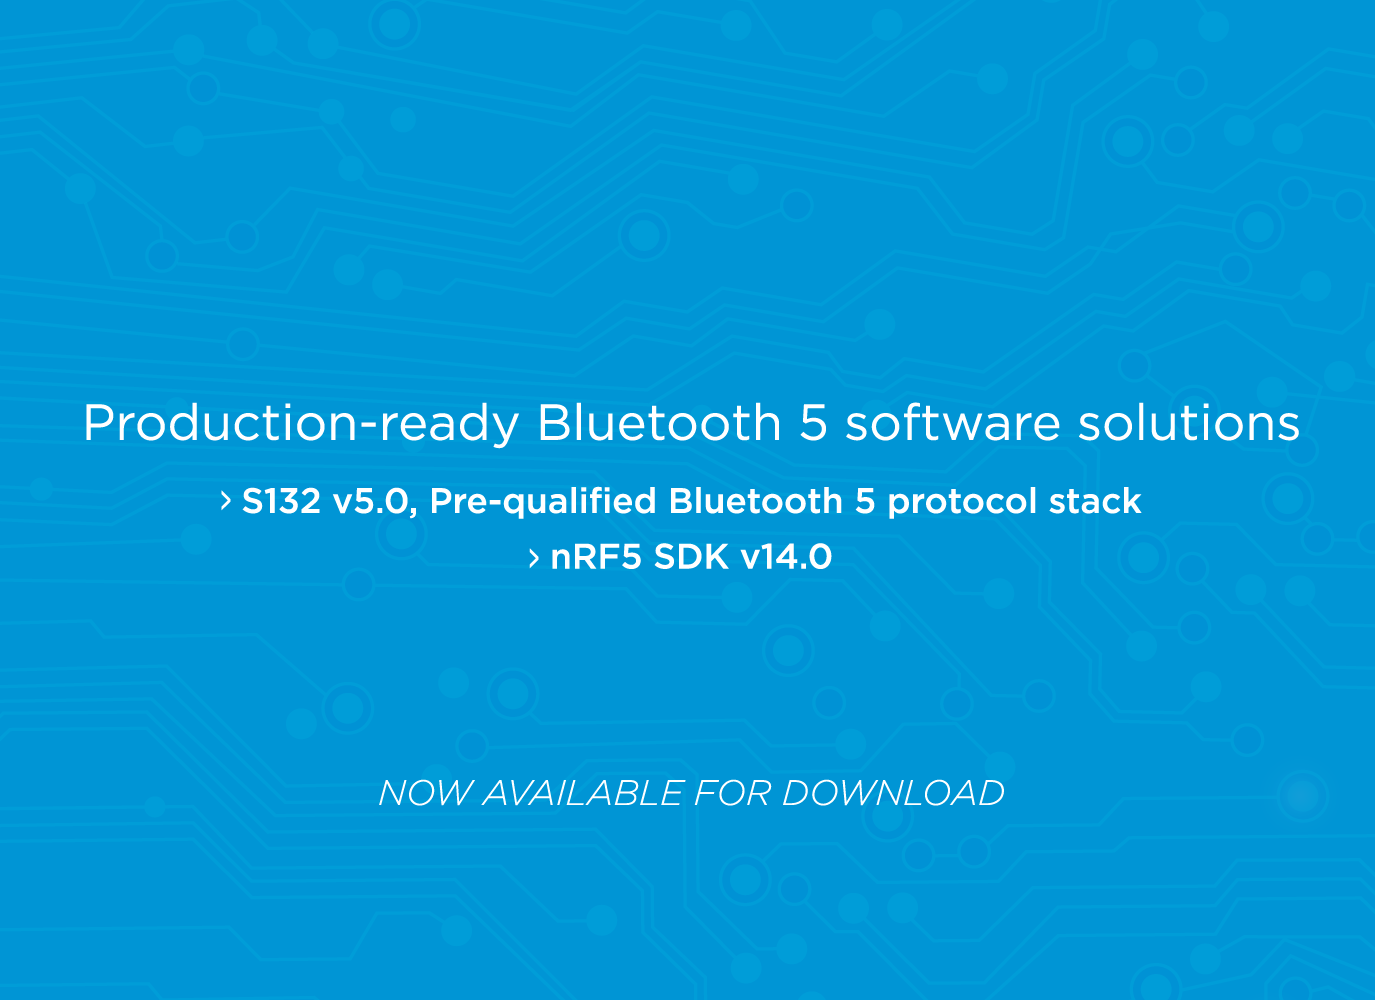 Bluetooth 5, software